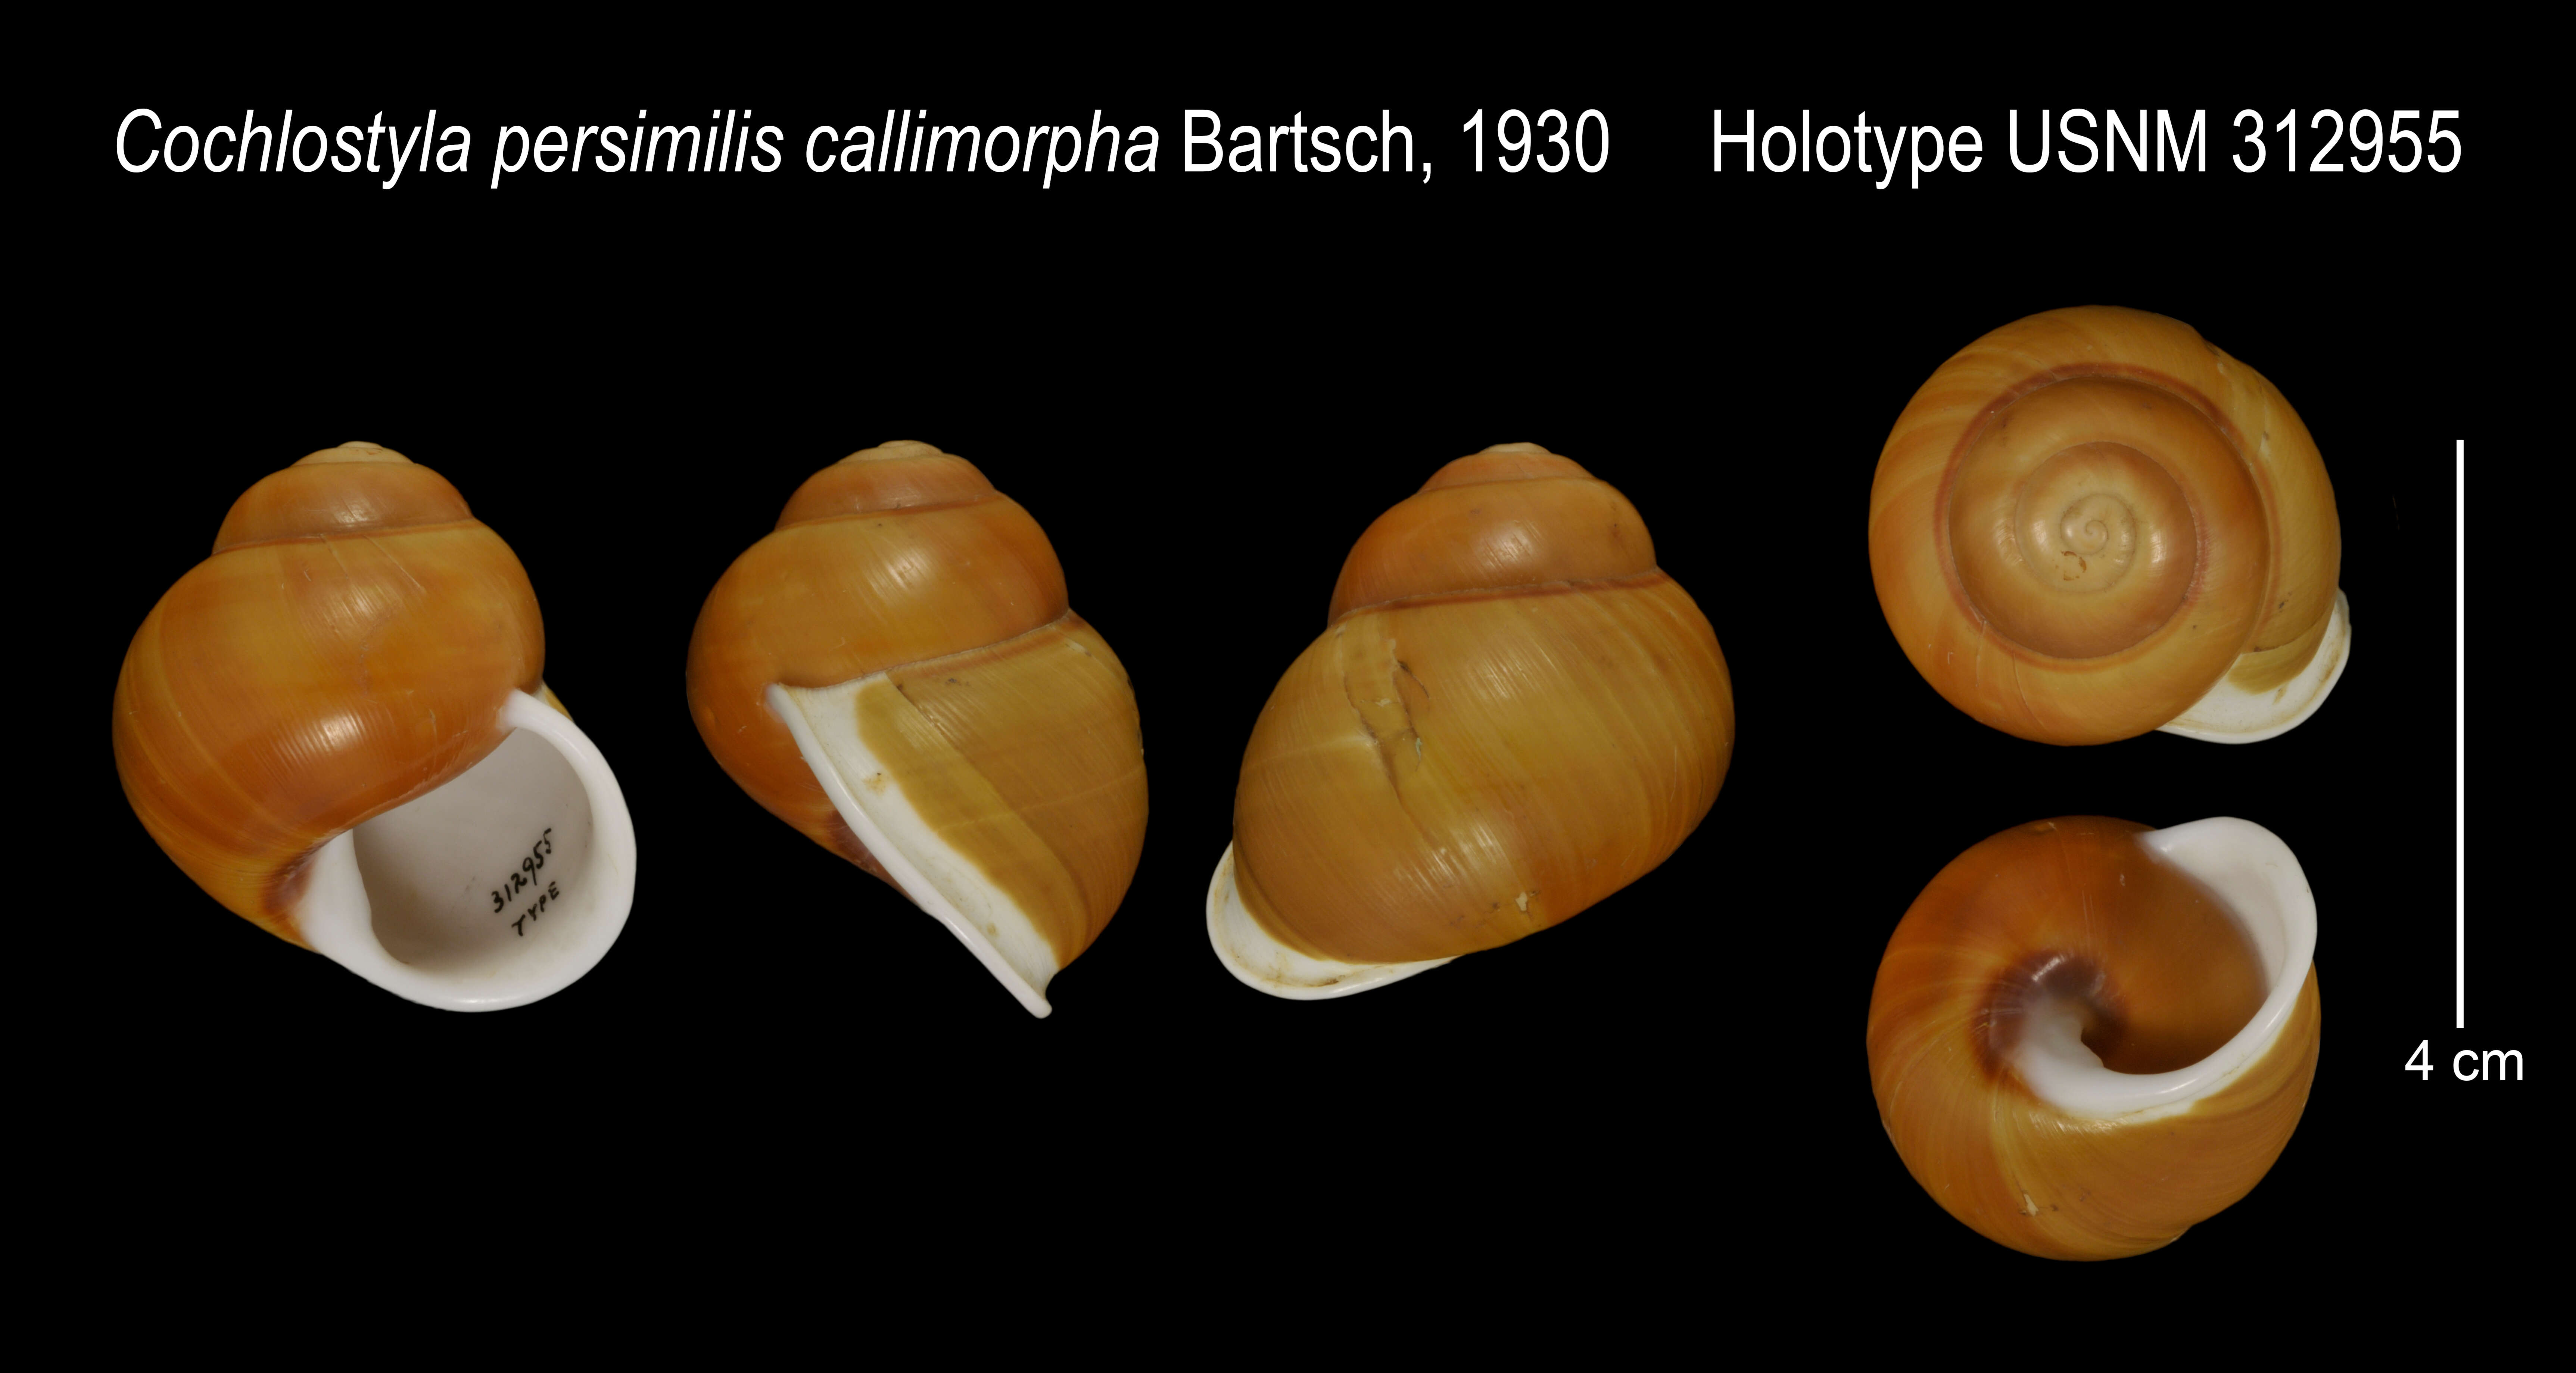 Image of Cochlostyla persimilis callimorpha Bartsch